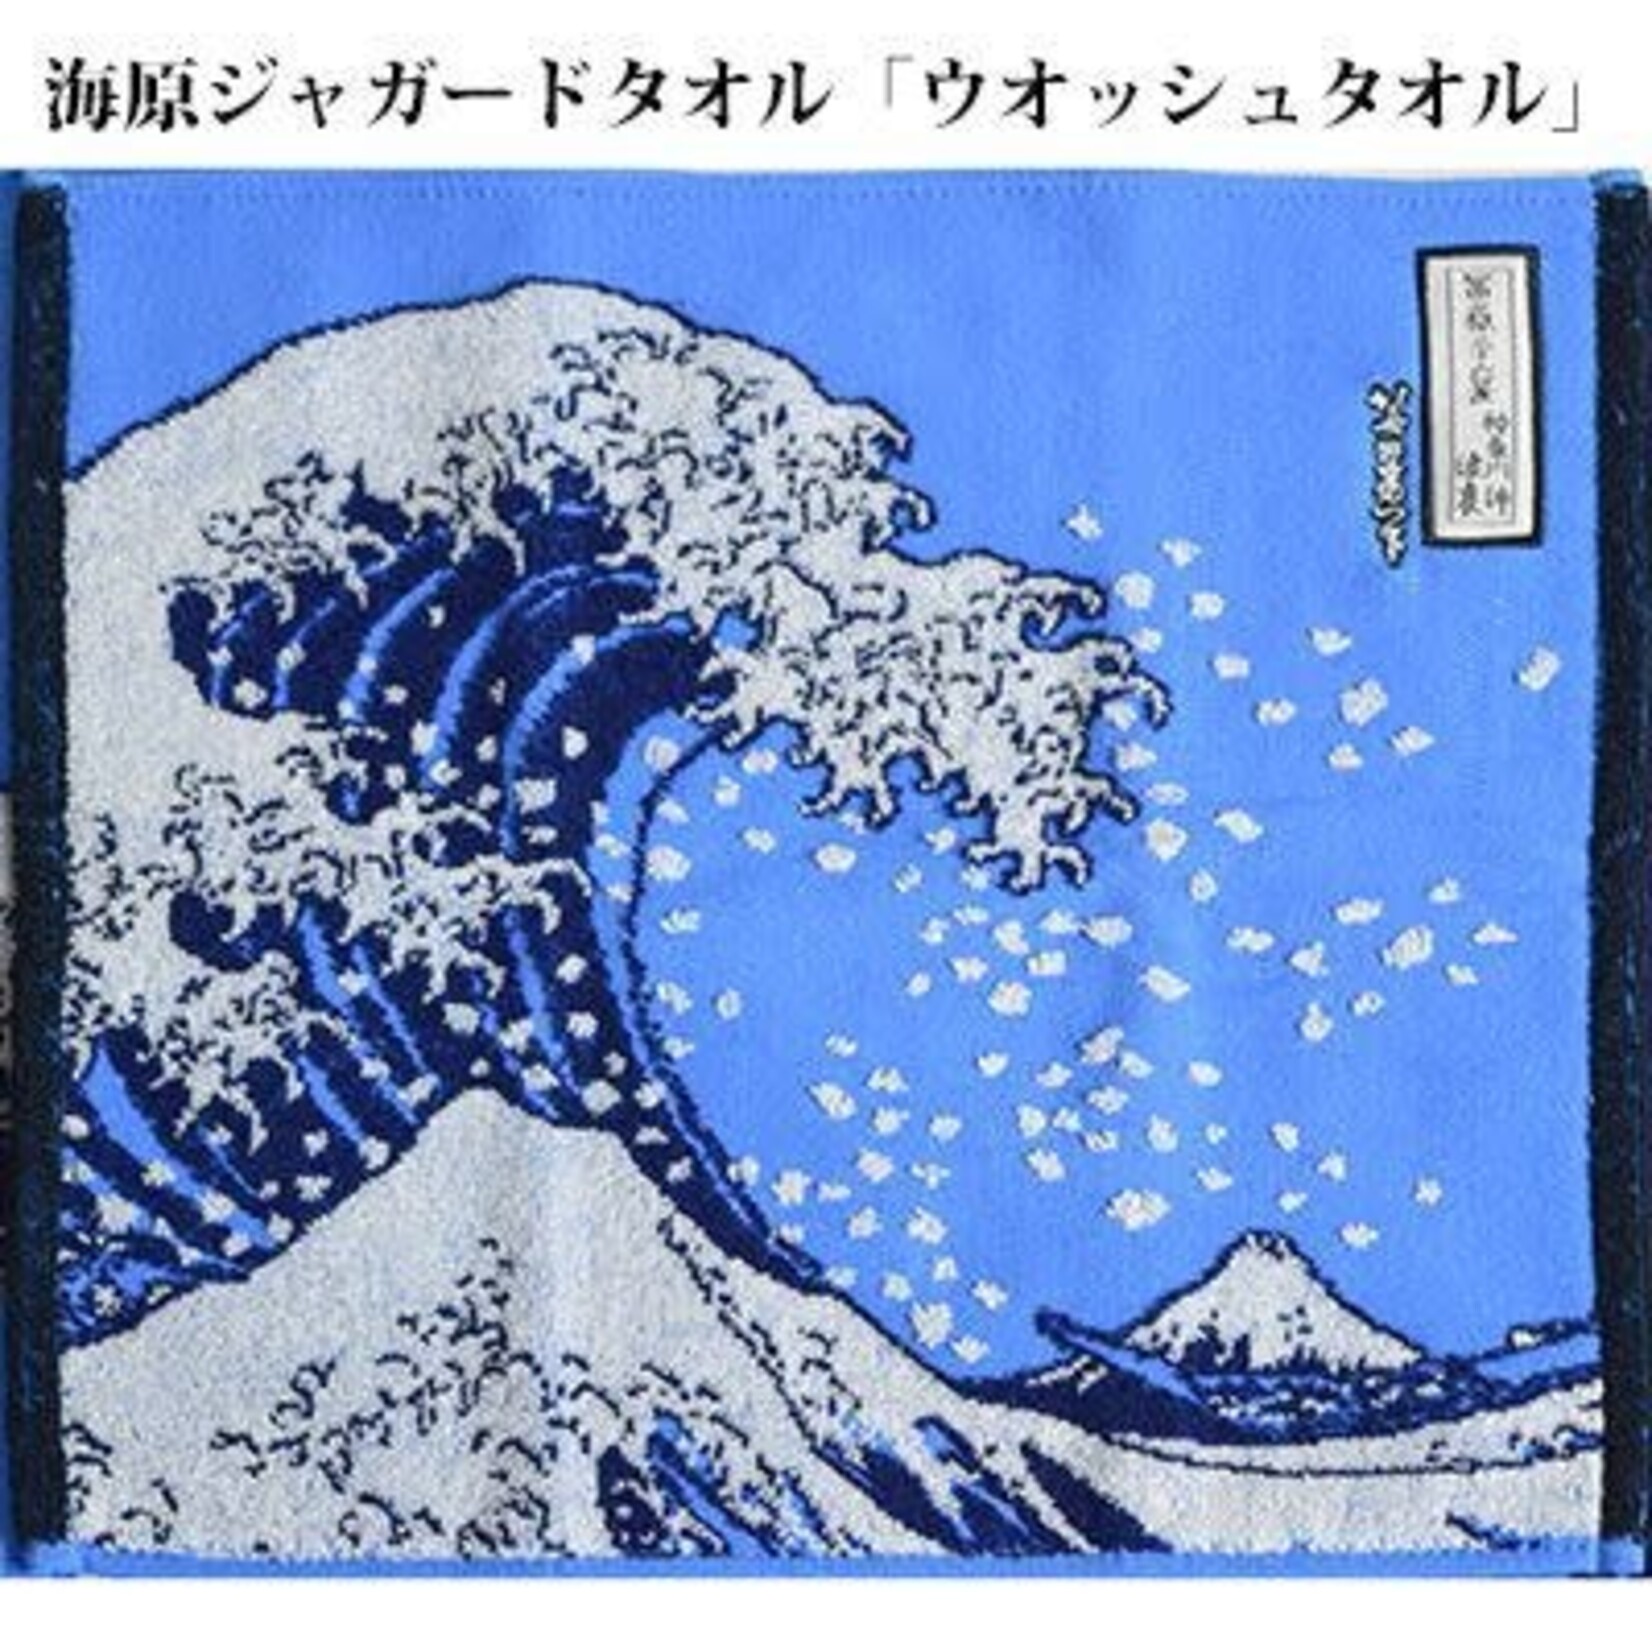 Marushin Washcloth - Hokusai - Great Wave - 0515030900